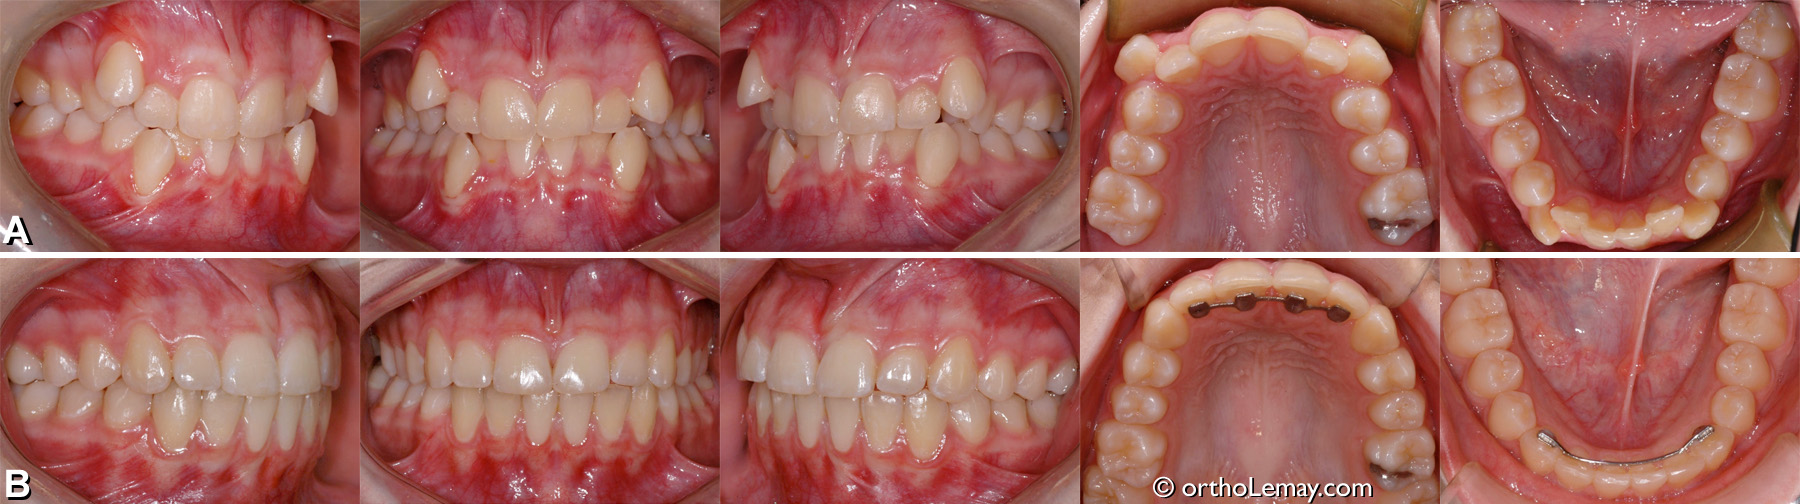 ùmoo dentaire classe 1 chevauchement dentaire, dental crowding expansion orthodontique en orthodontie 